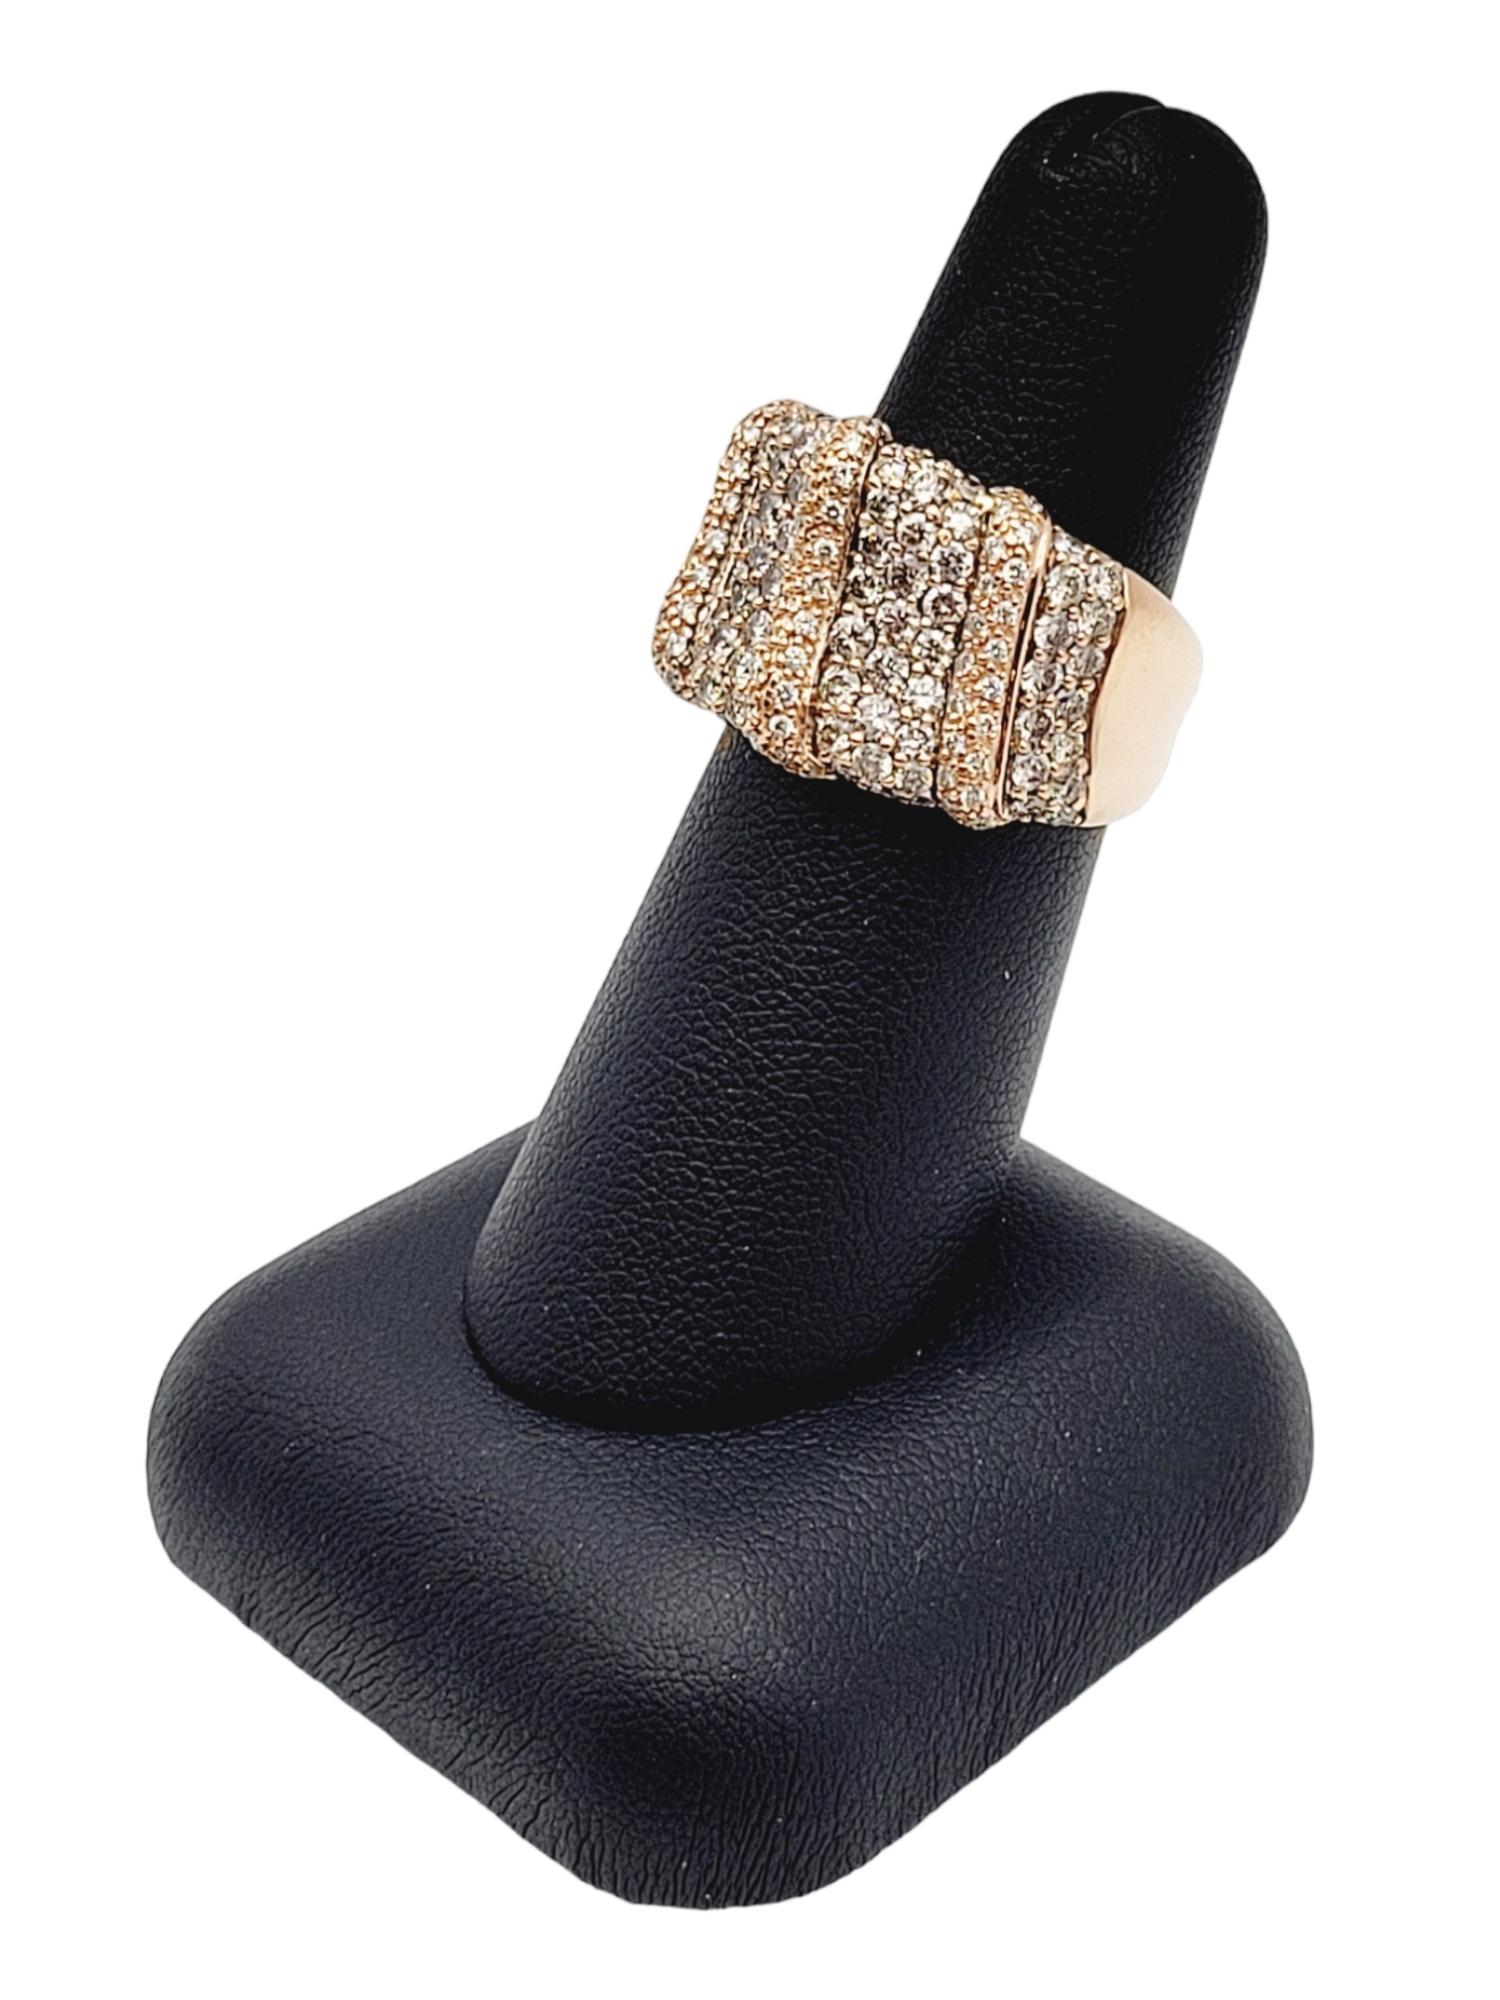 2.14 Carat Light Brown Diamond Pave Band Ring in Polished 14 Karat Rose Gold For Sale 7